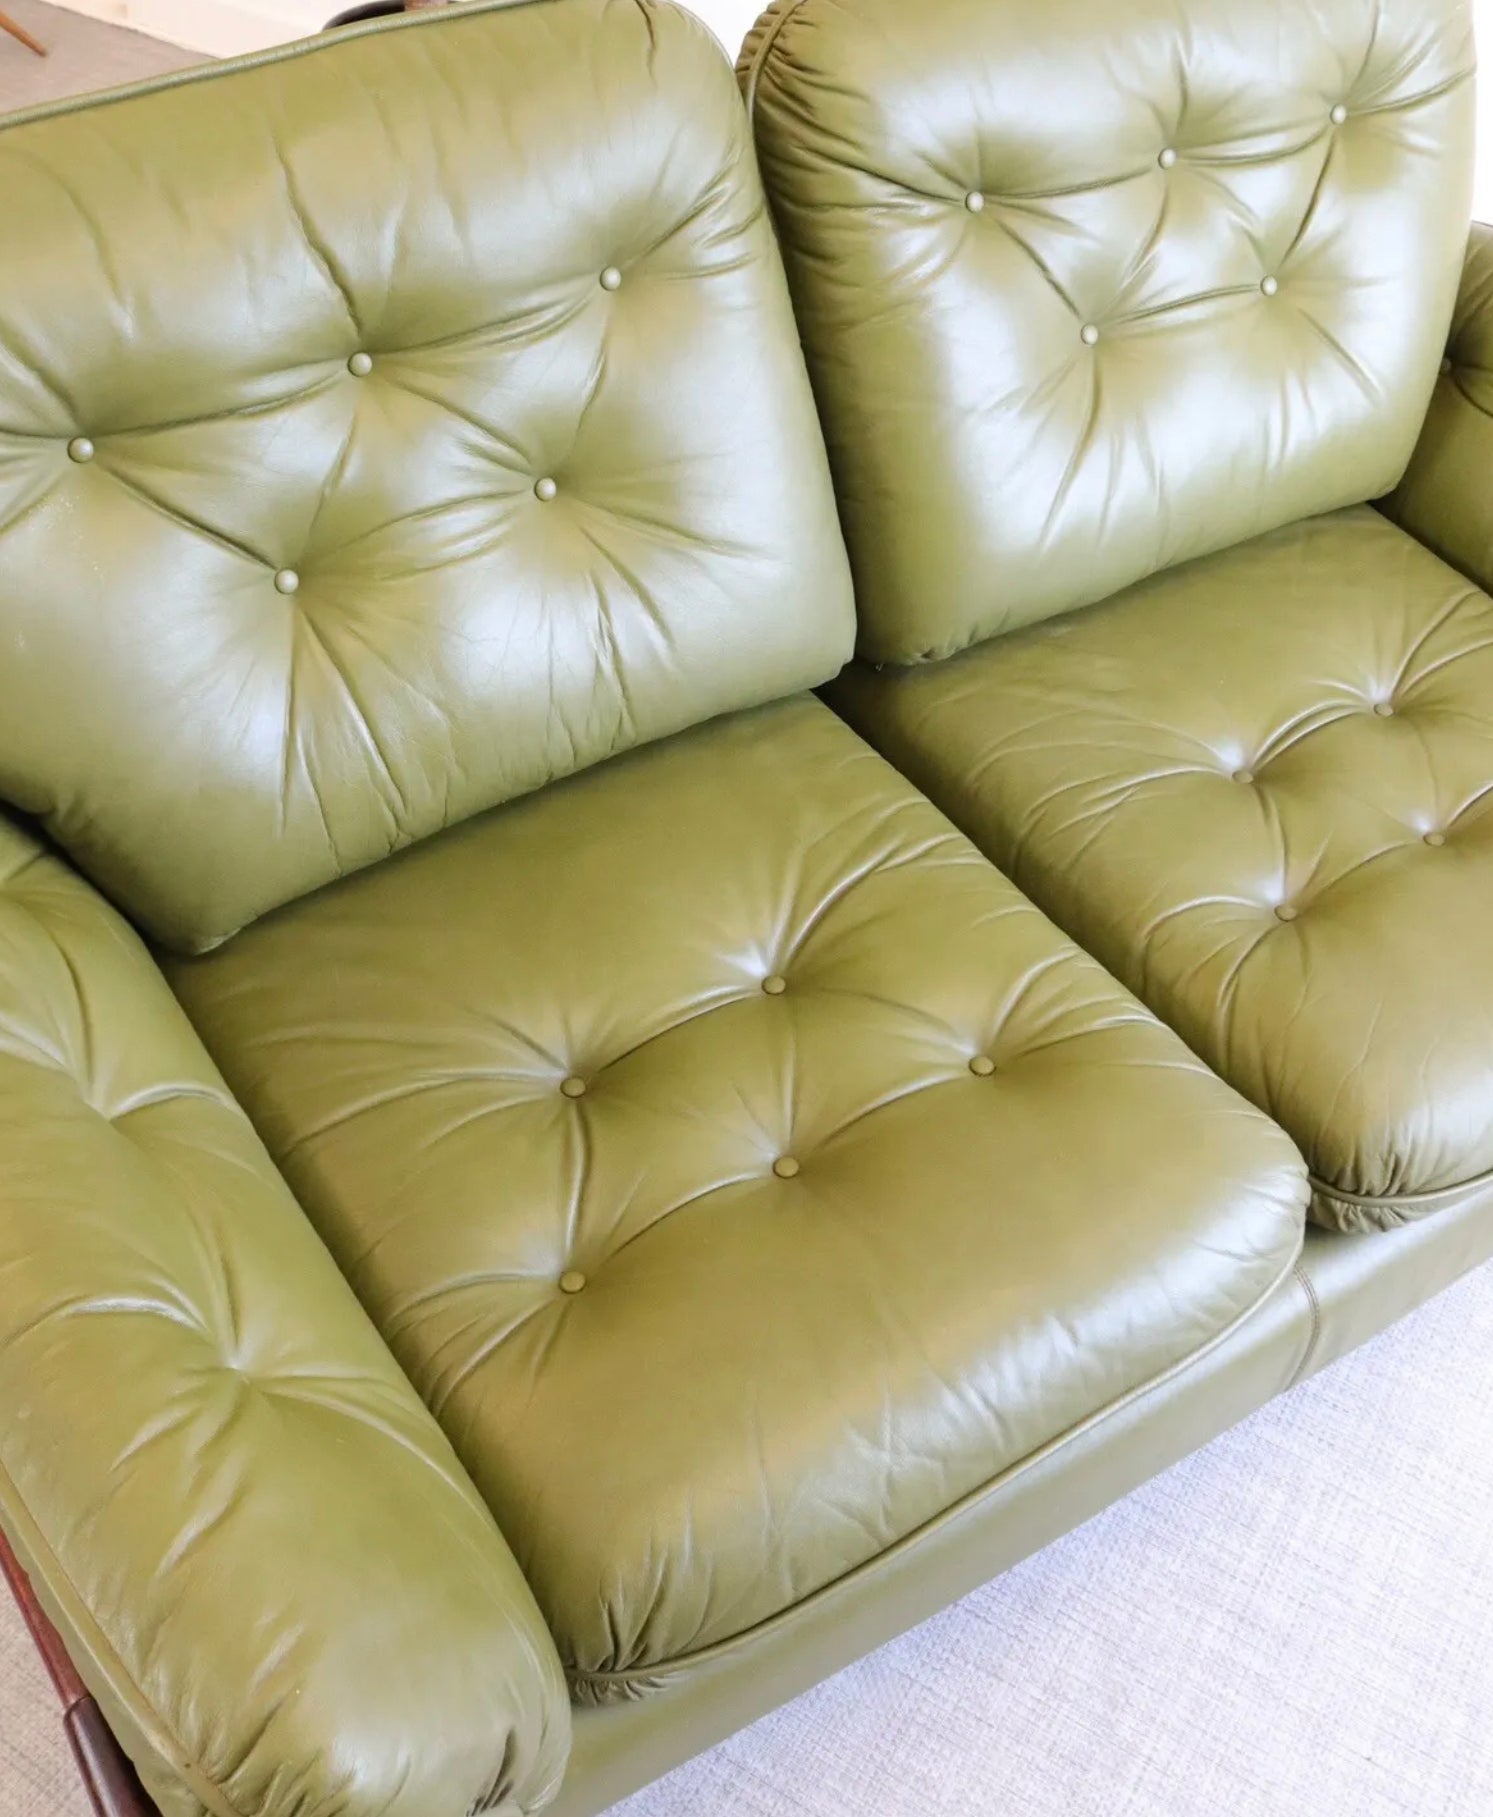 Ulferts of Sweden Green Leather / Rattan 2 Seater Sofa - teakyfinders